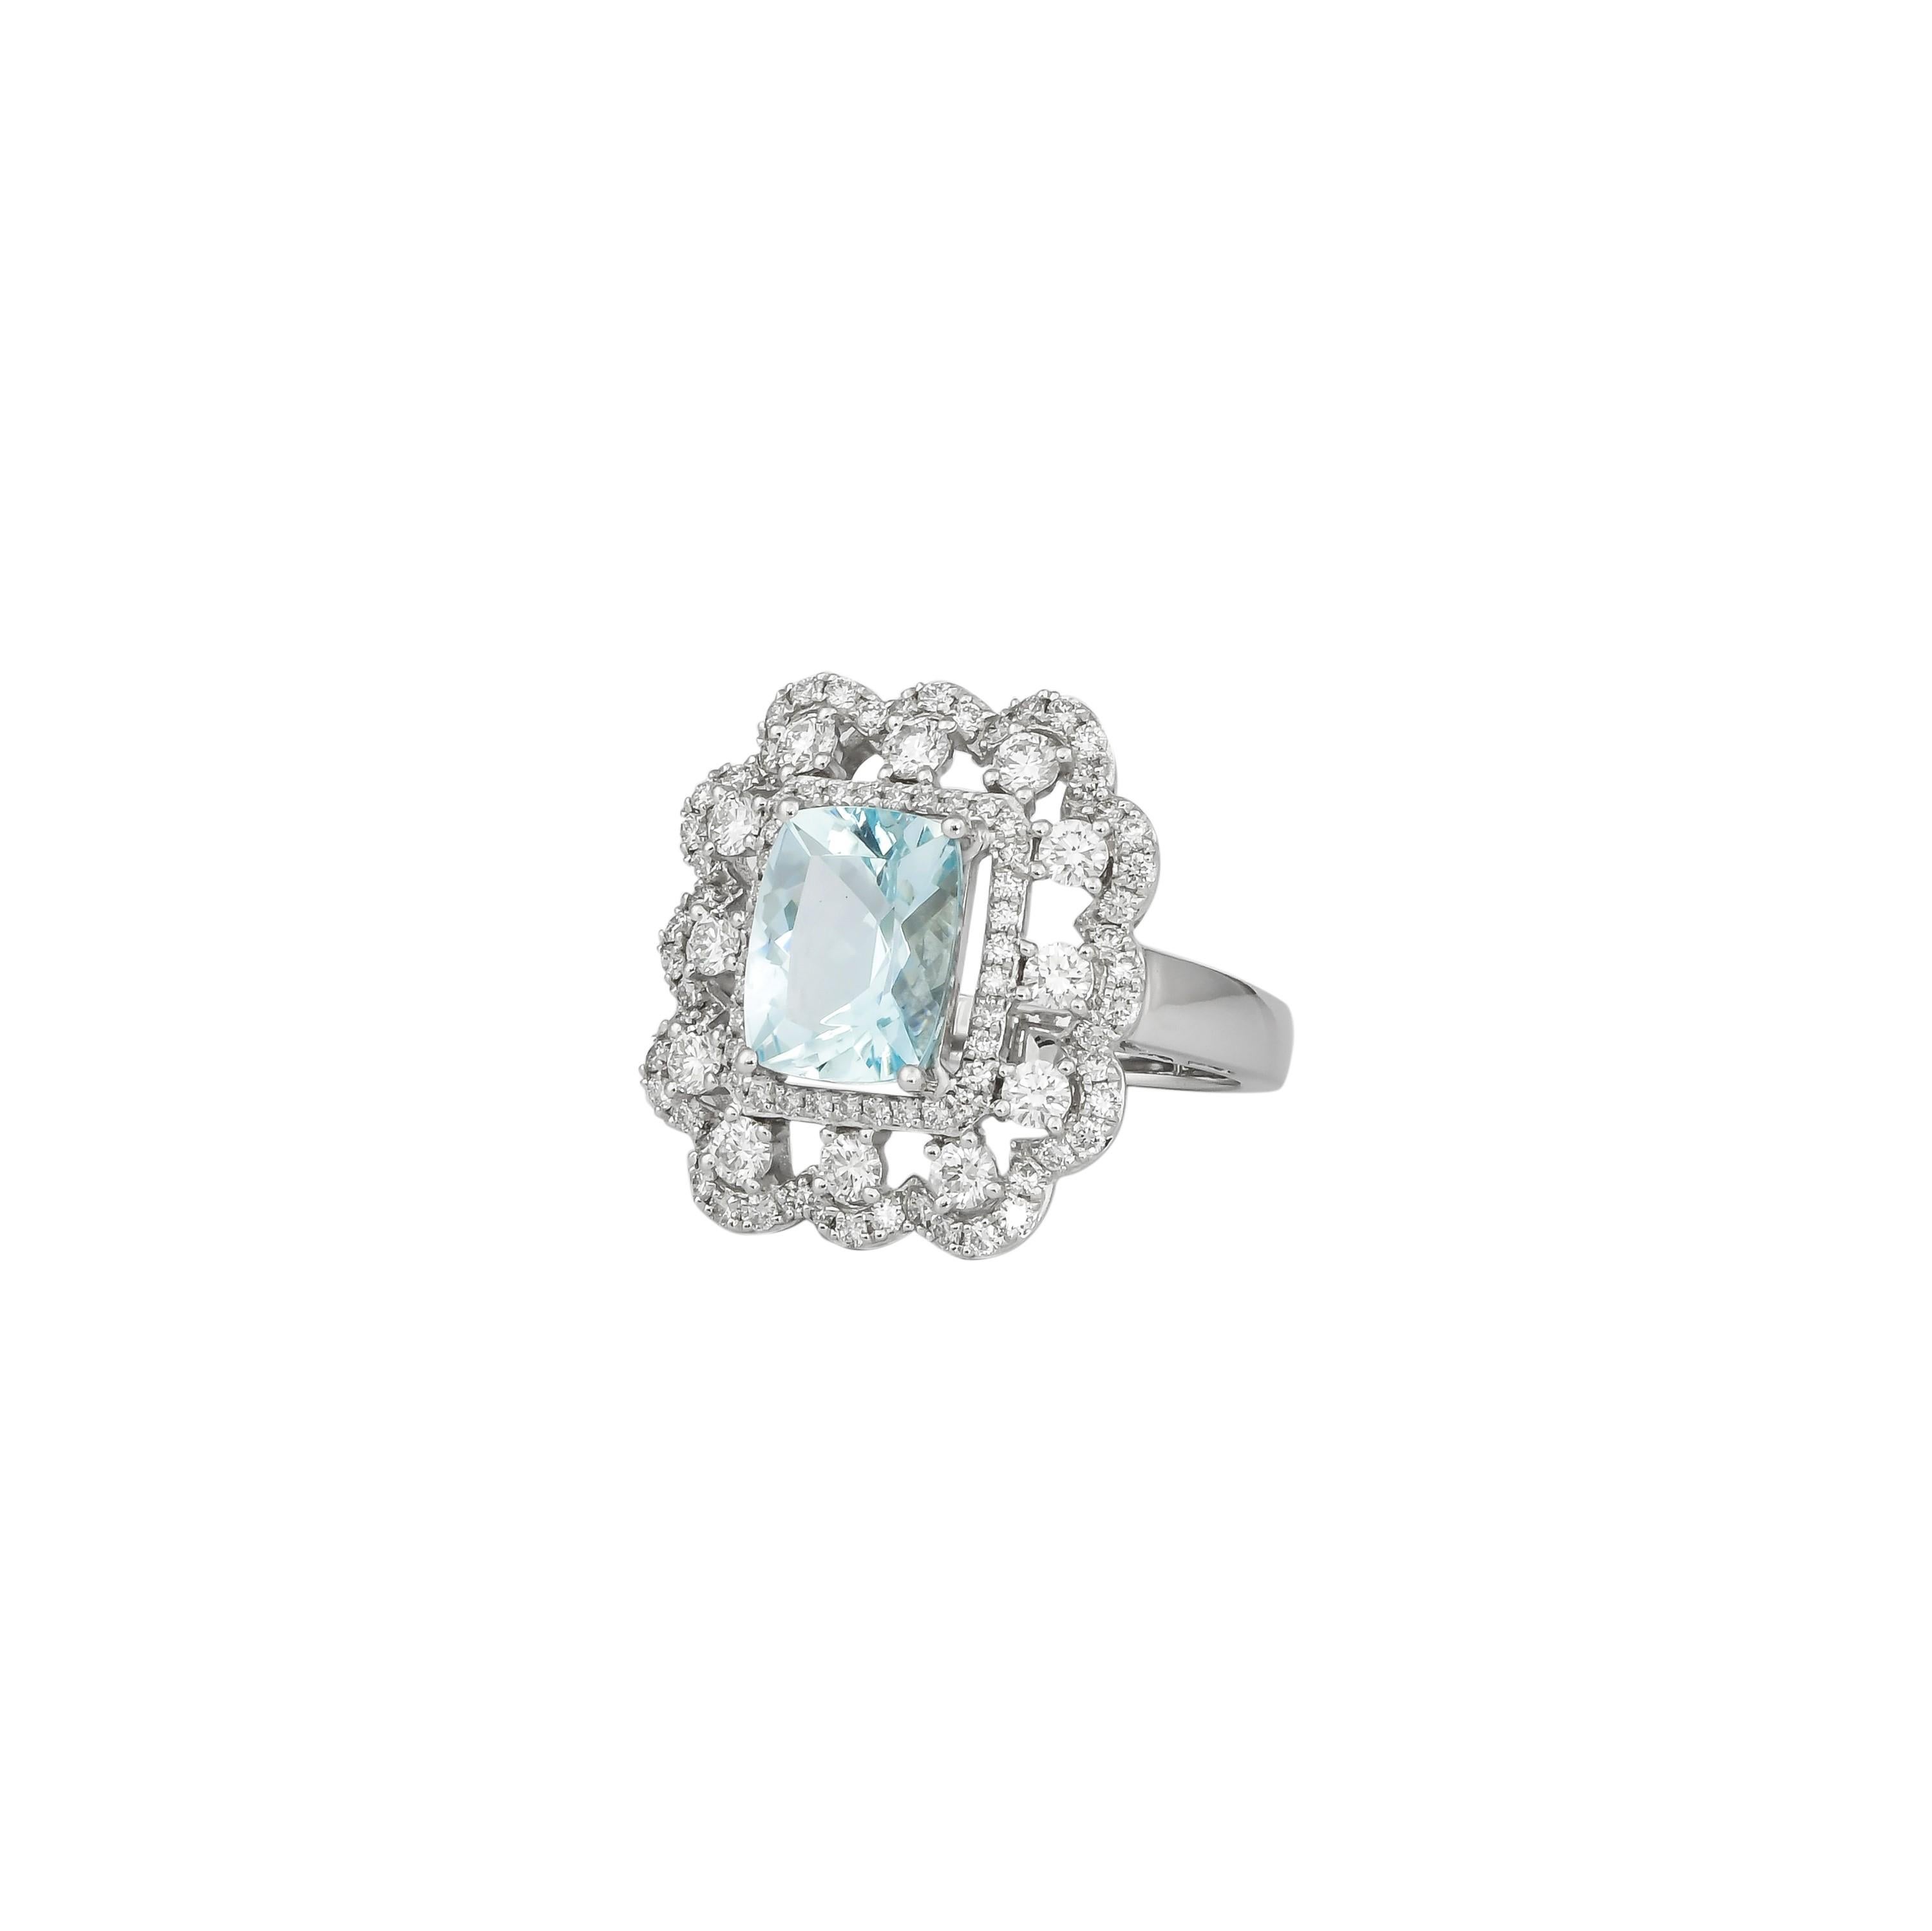 Contemporary 2.59 Carat Aquamarine and Diamond Ring in 18 Karat White Gold For Sale